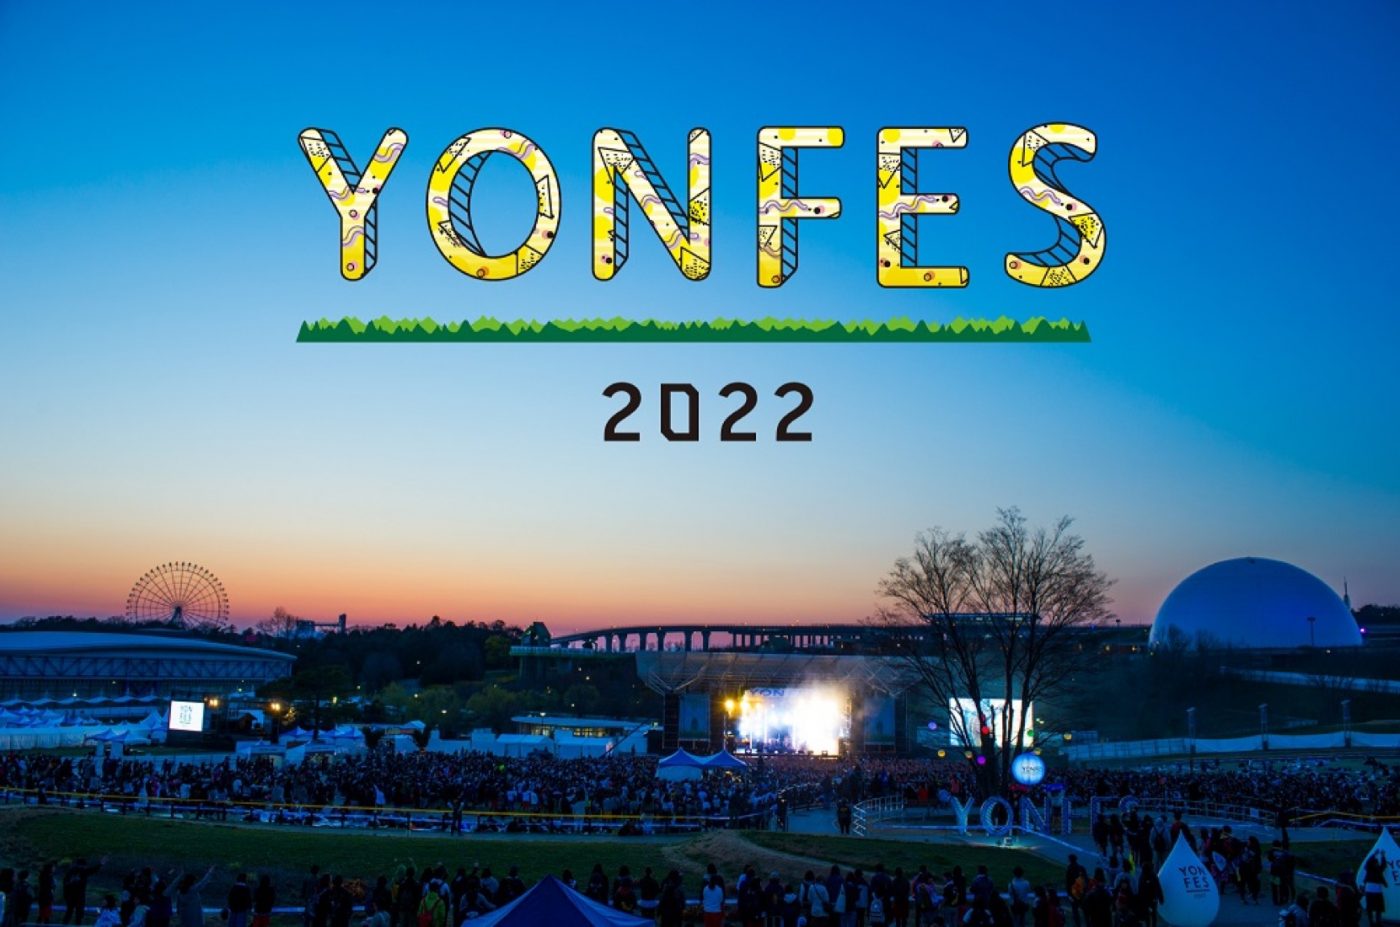 04 Limited Sazabys主催『YON FES 2022』開催決定